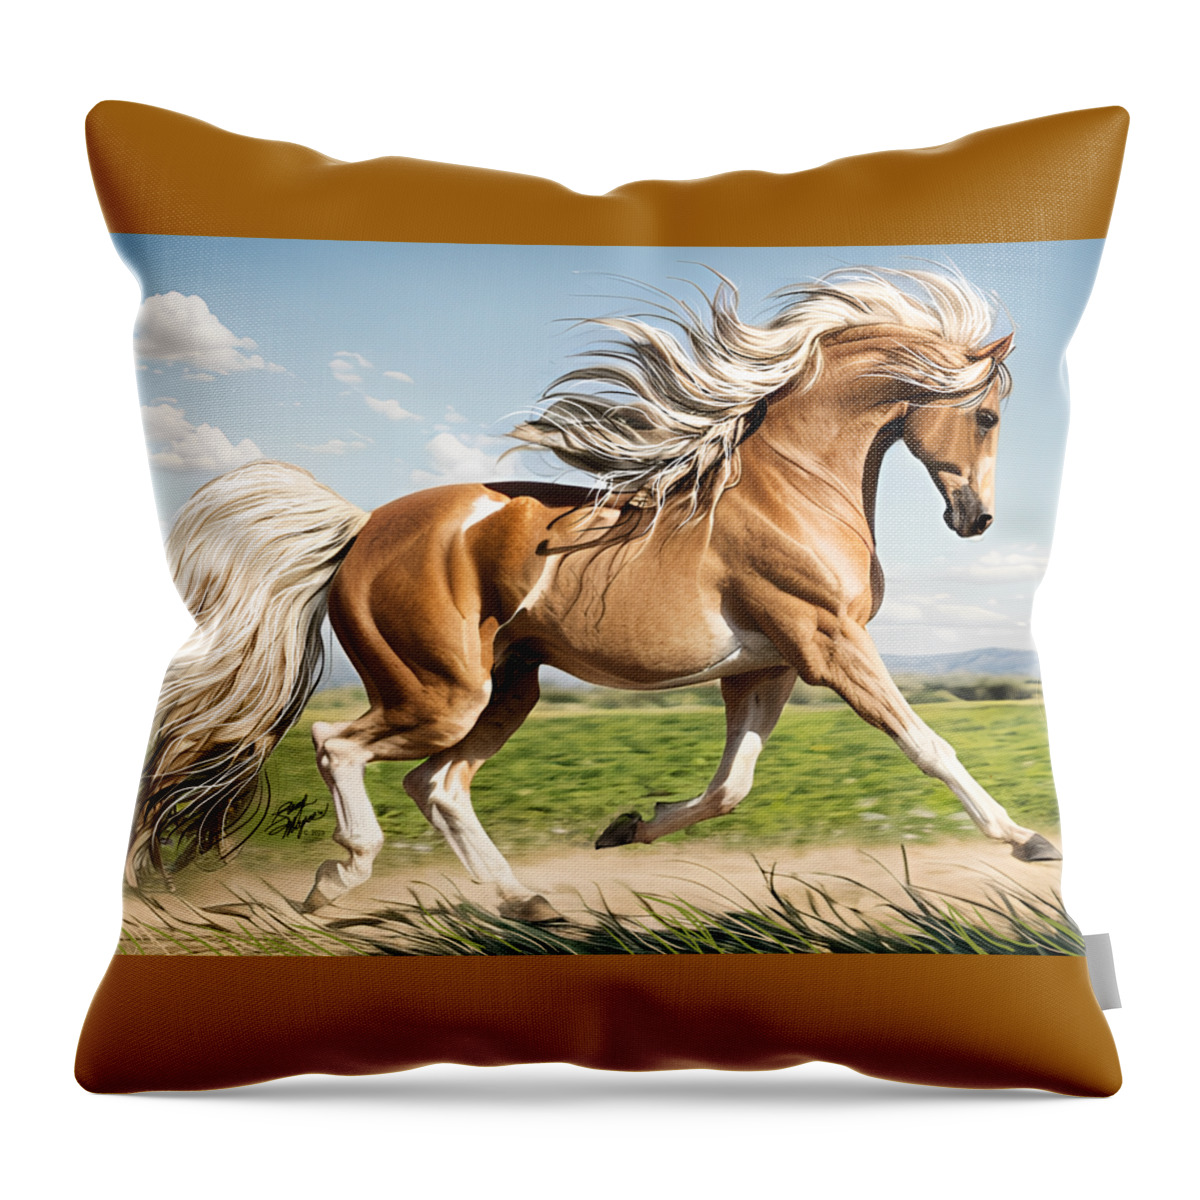 Art Of The Horse Throw Pillow featuring the digital art Seattle Joyful Horse by Stacey Mayer